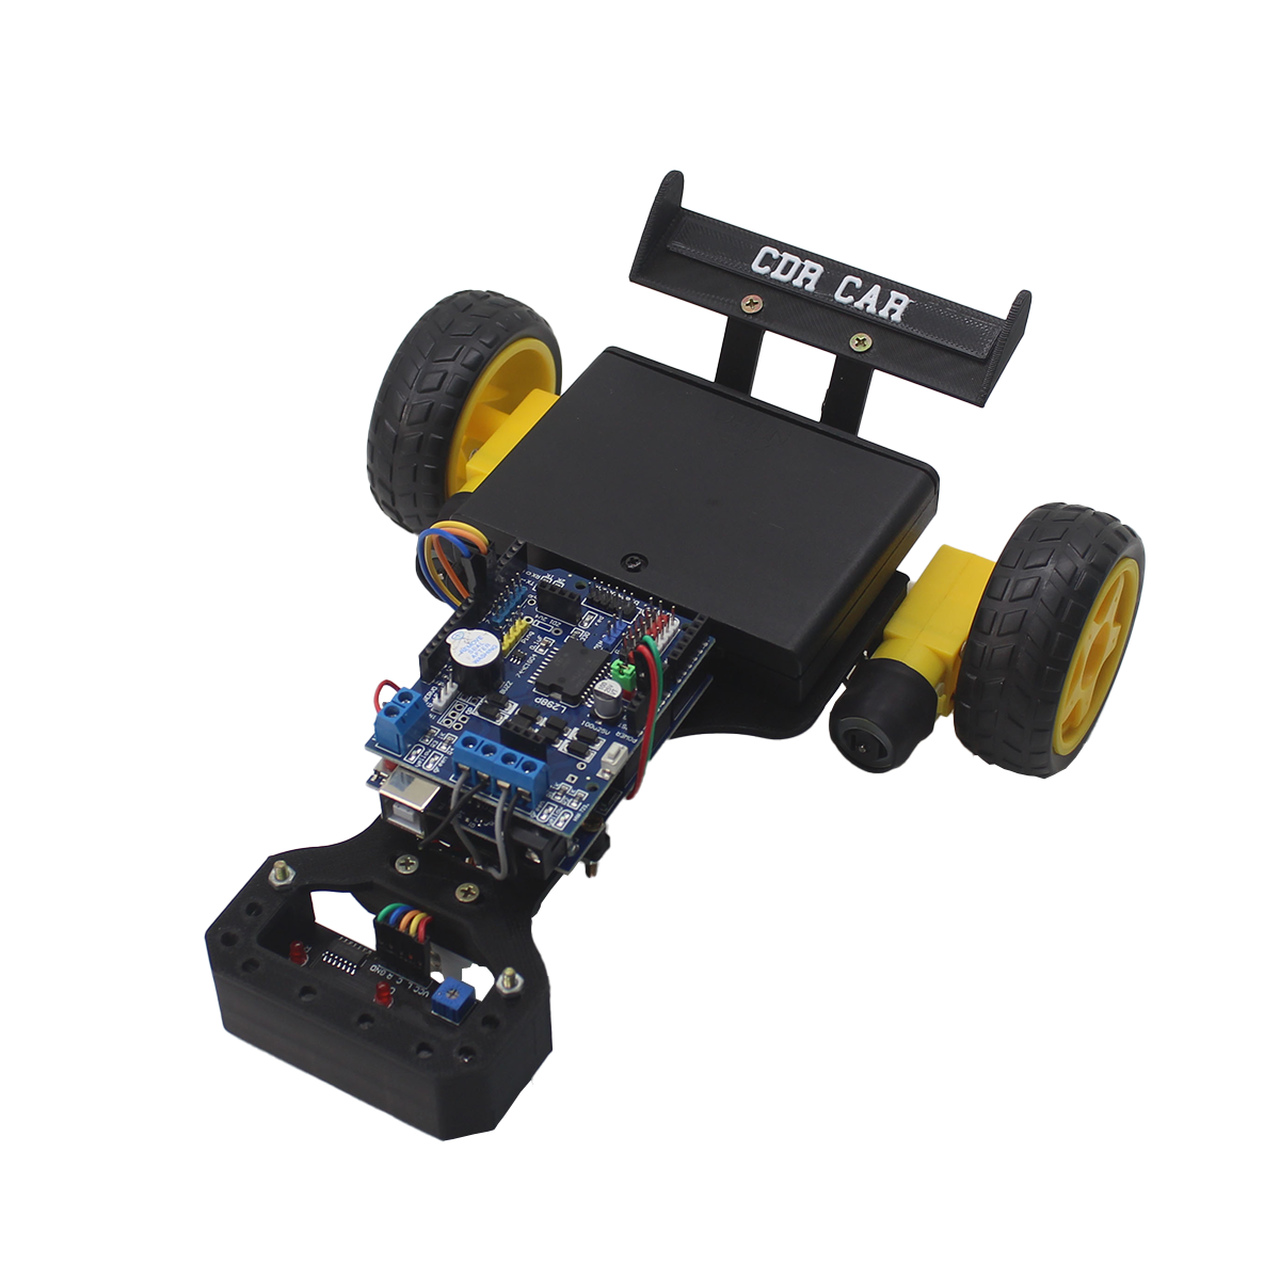 KIT para montar Robô Seguidor de Linha - CDR Car